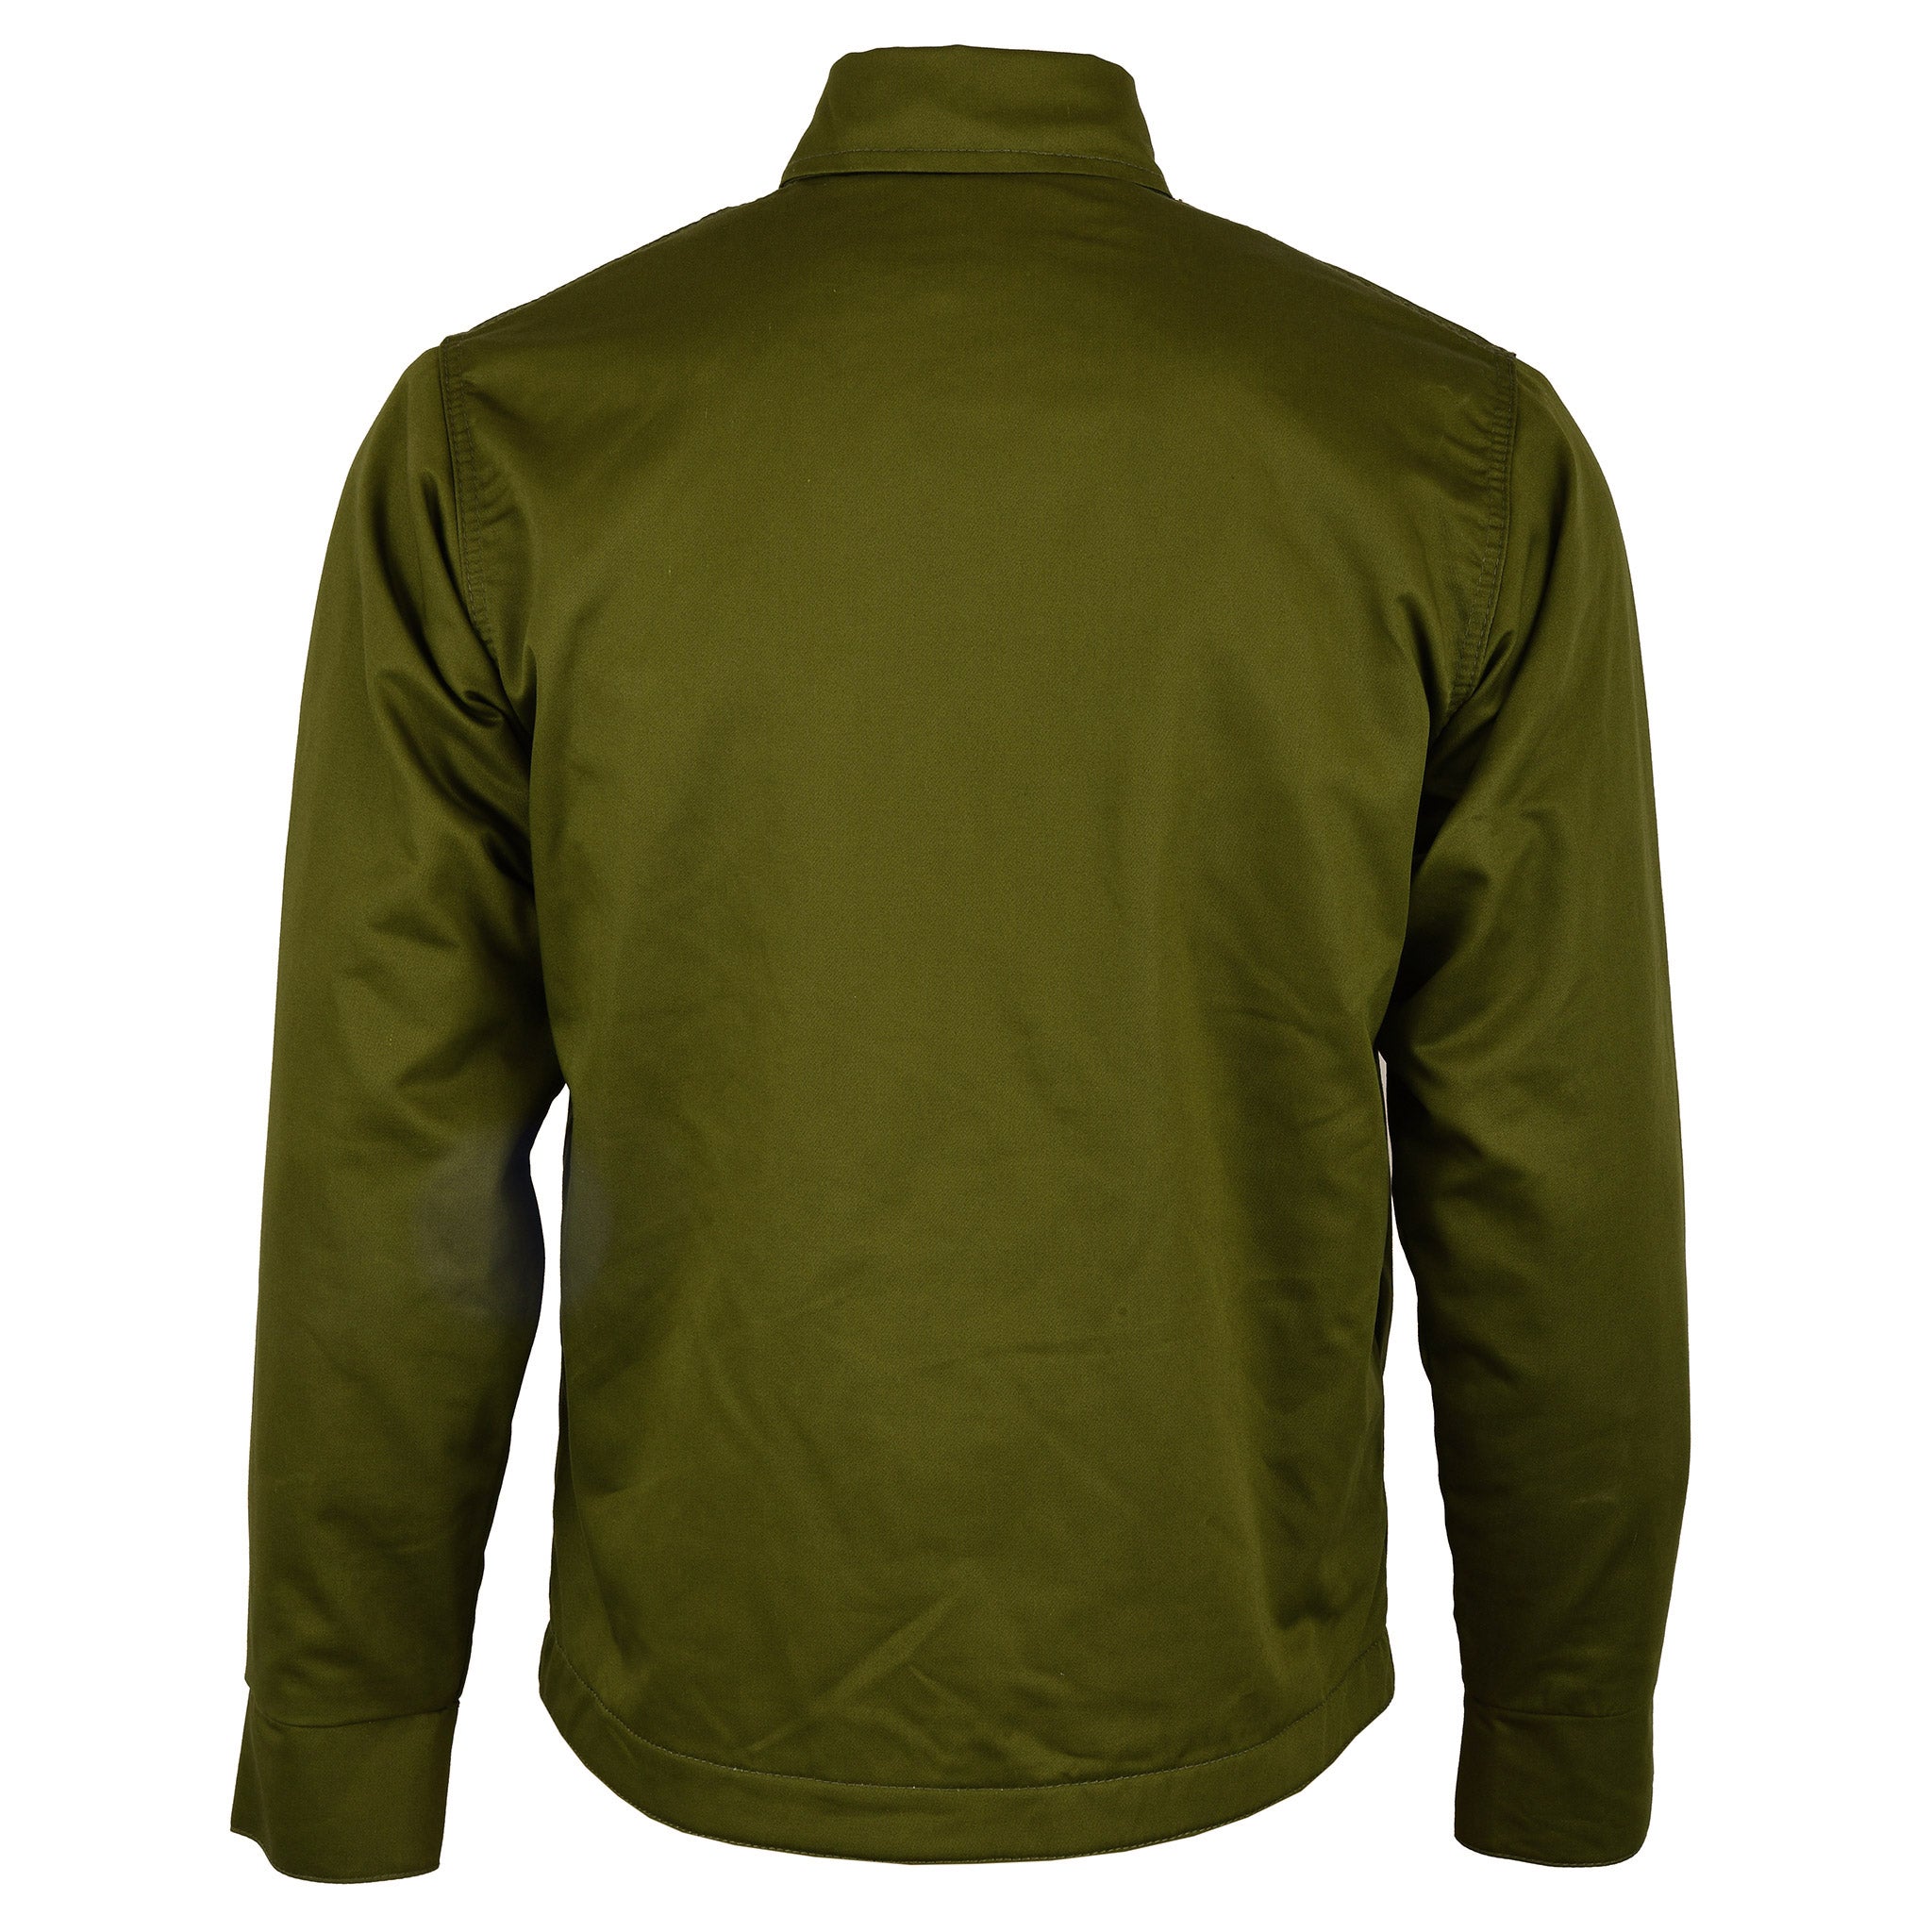 Men's Blackheath Protective Jacket